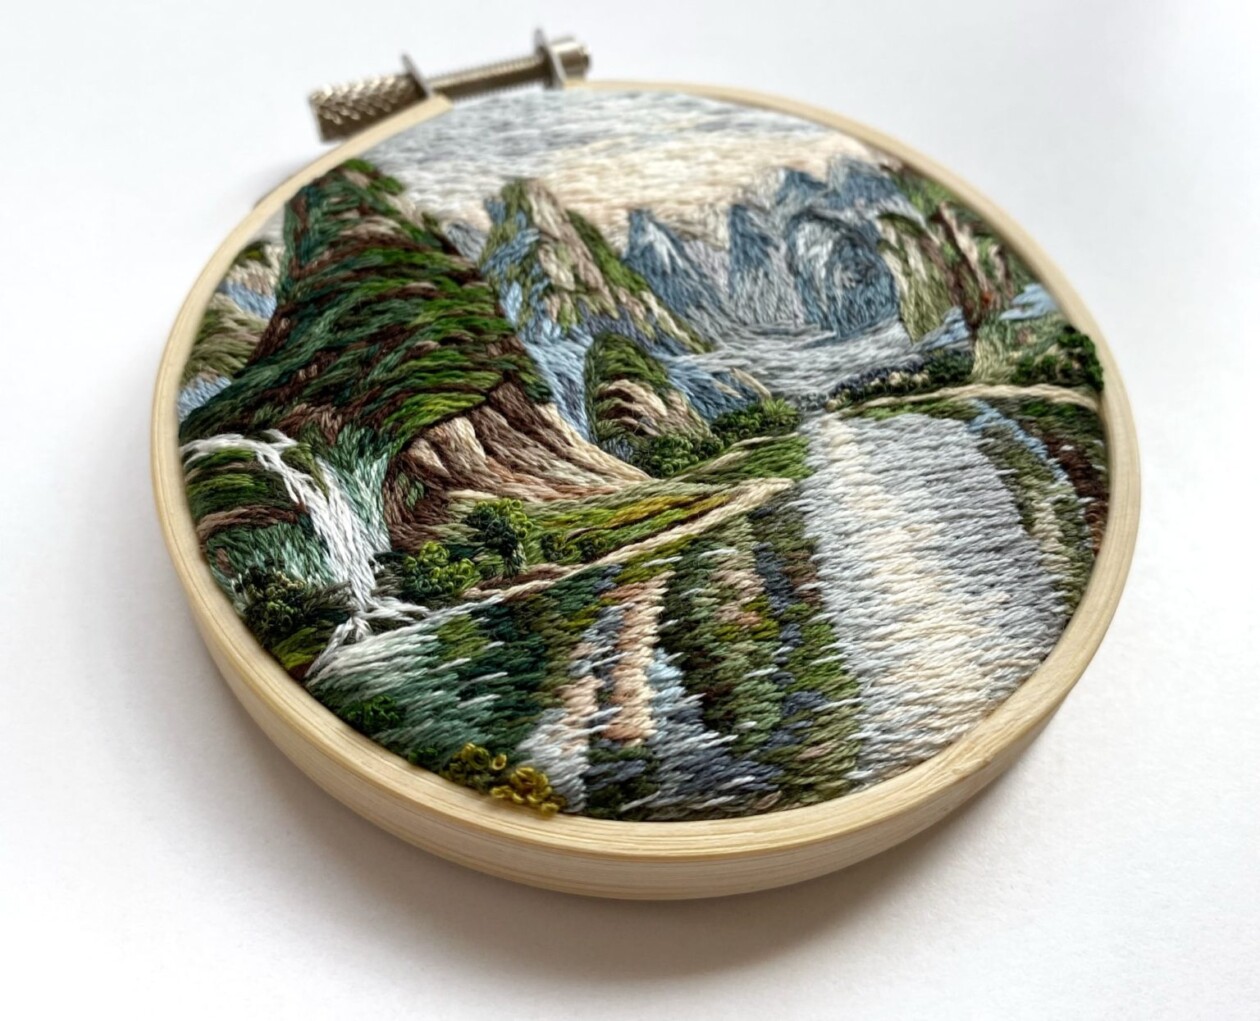 Wonderful Impressionistic Landscape Embroideries By Cassandra Dias (10)